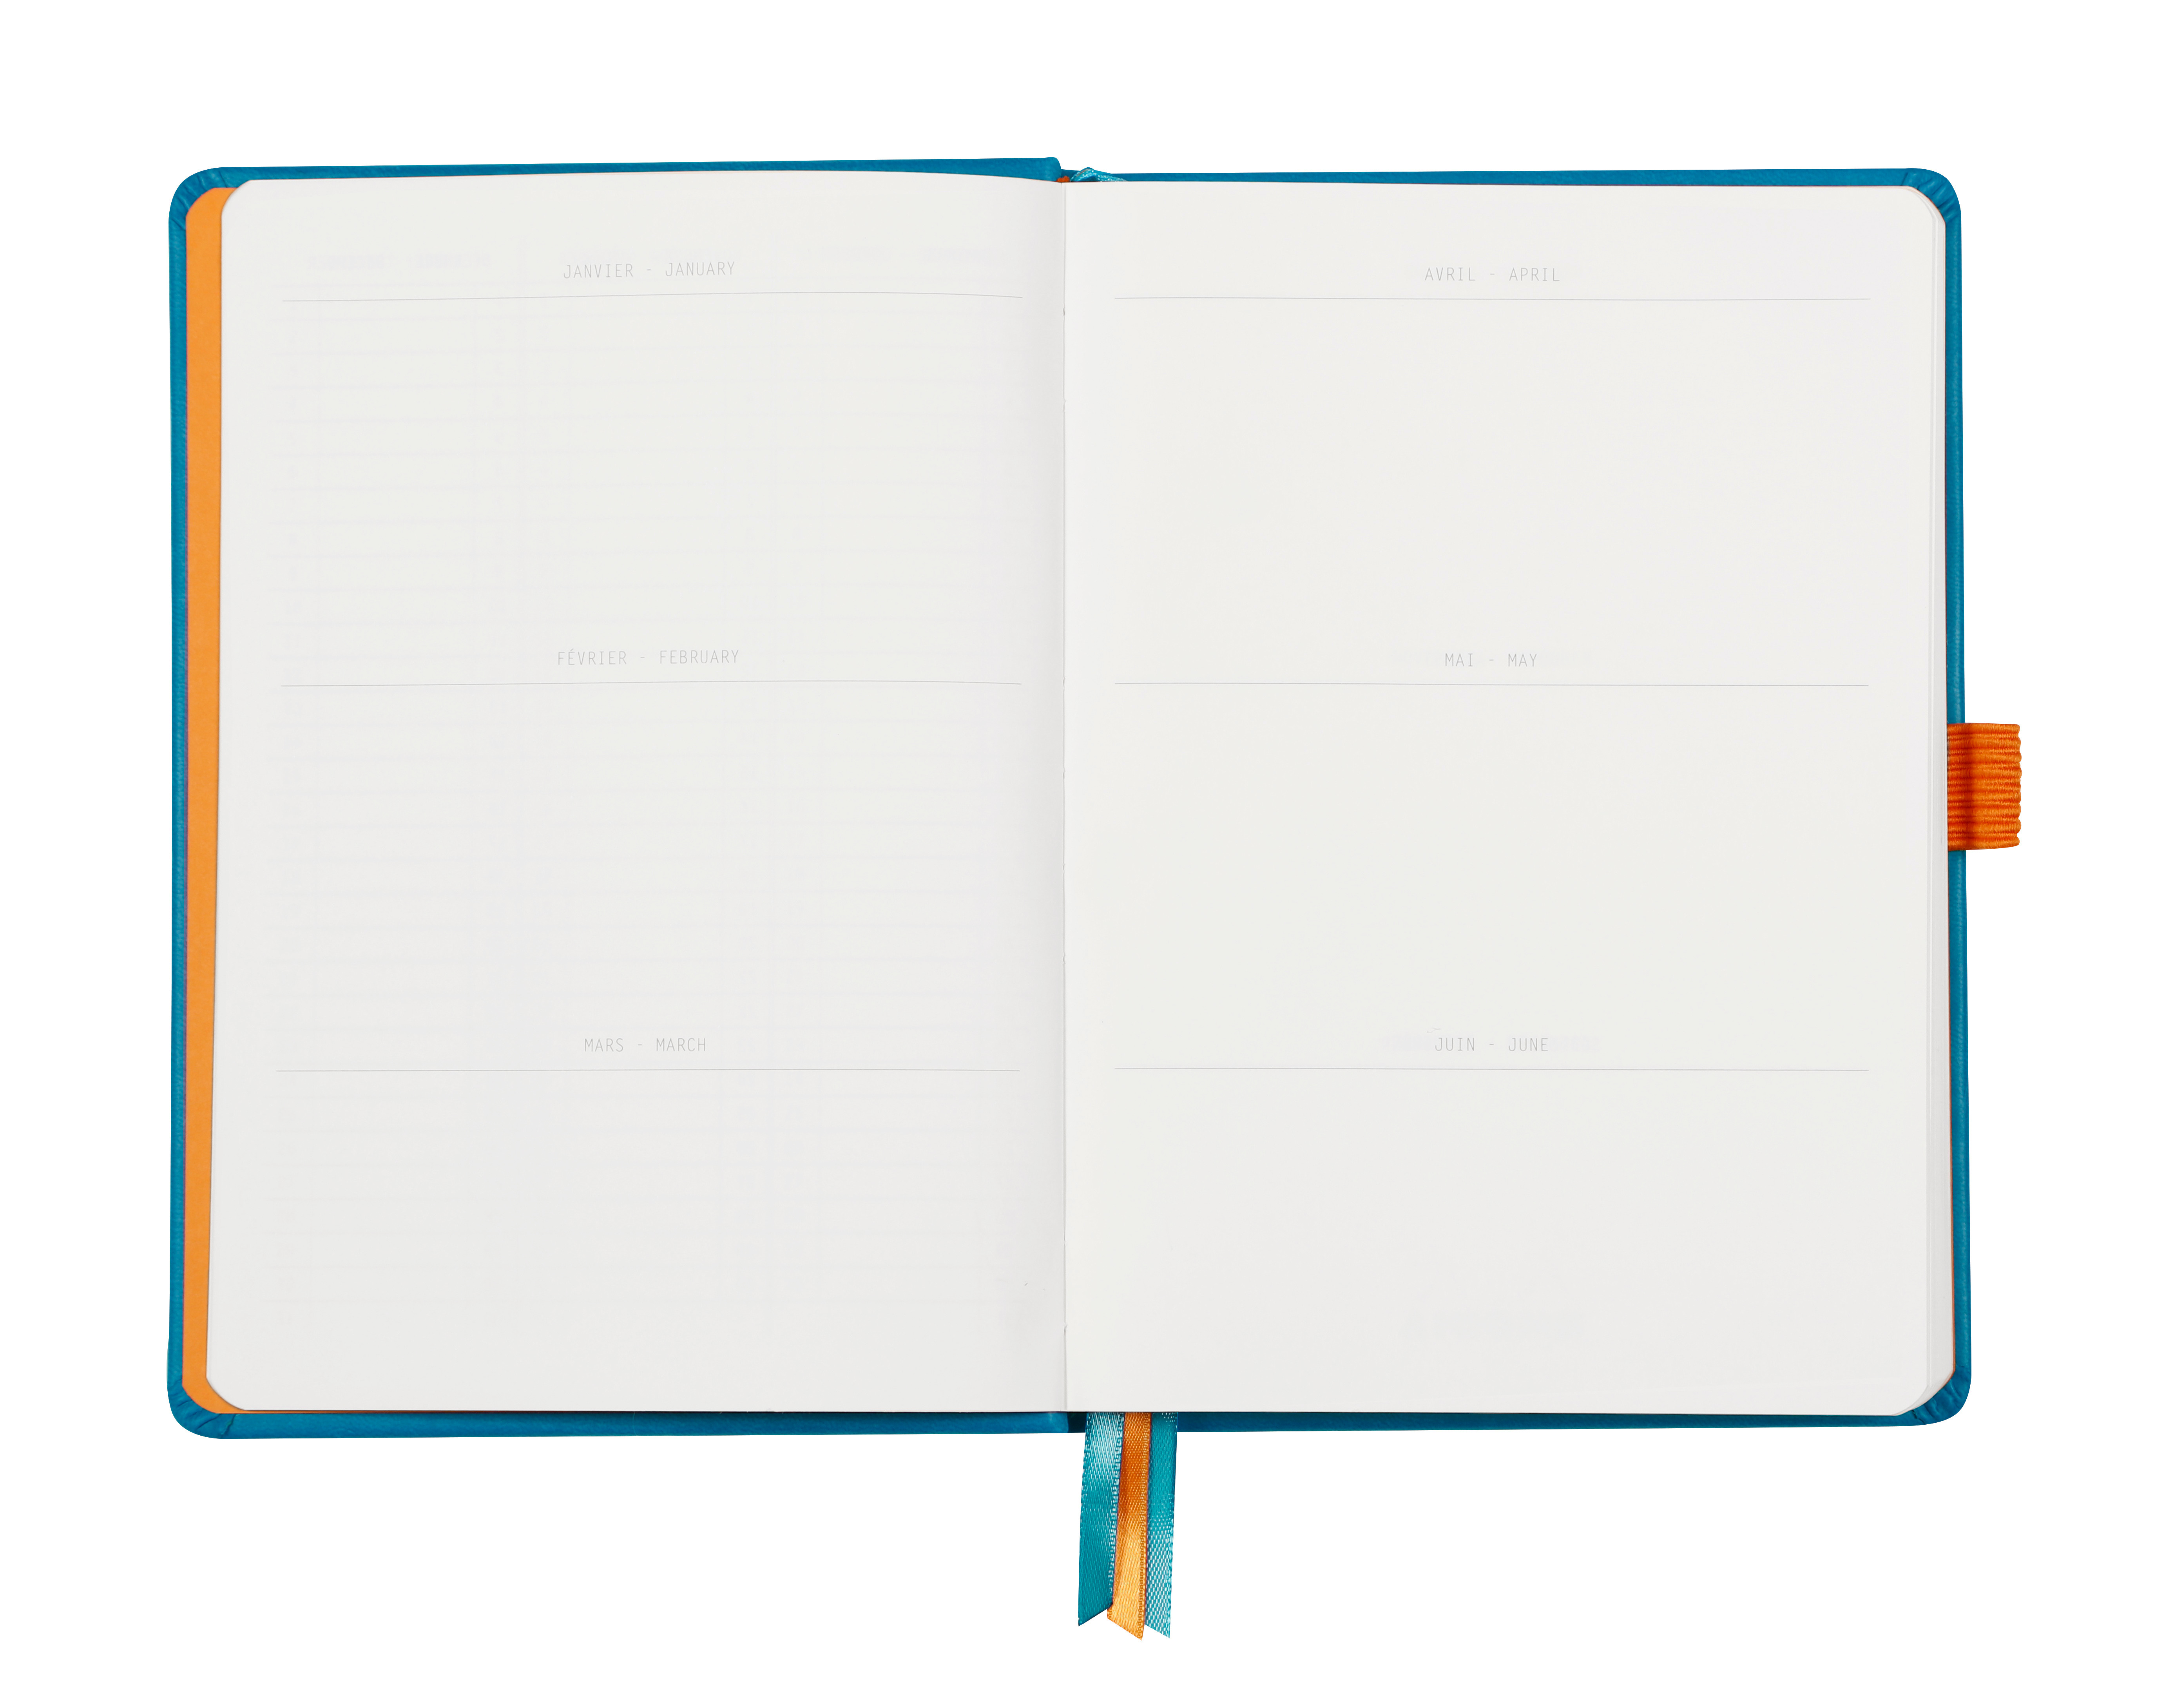 RHODIA Goalbook Carnet A5 118576C Hardcover turquoise 240 f.